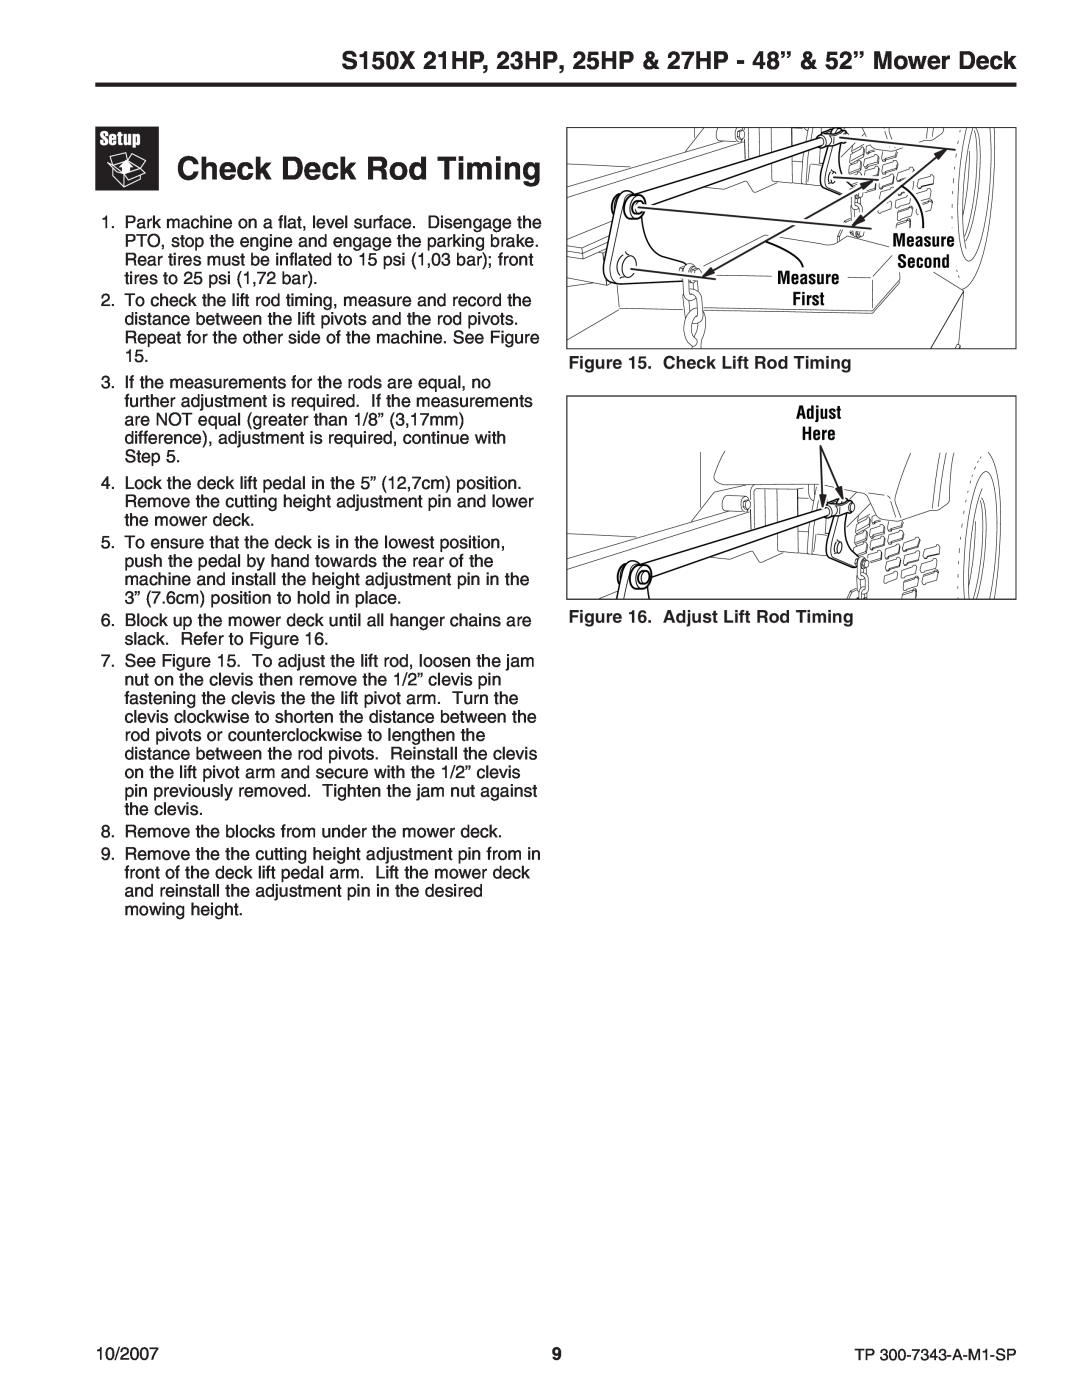 Snapper manual Check Deck Rod Timing, S150X 21HP, 23HP, 25HP & 27HP - 48” & 52” Mower Deck 